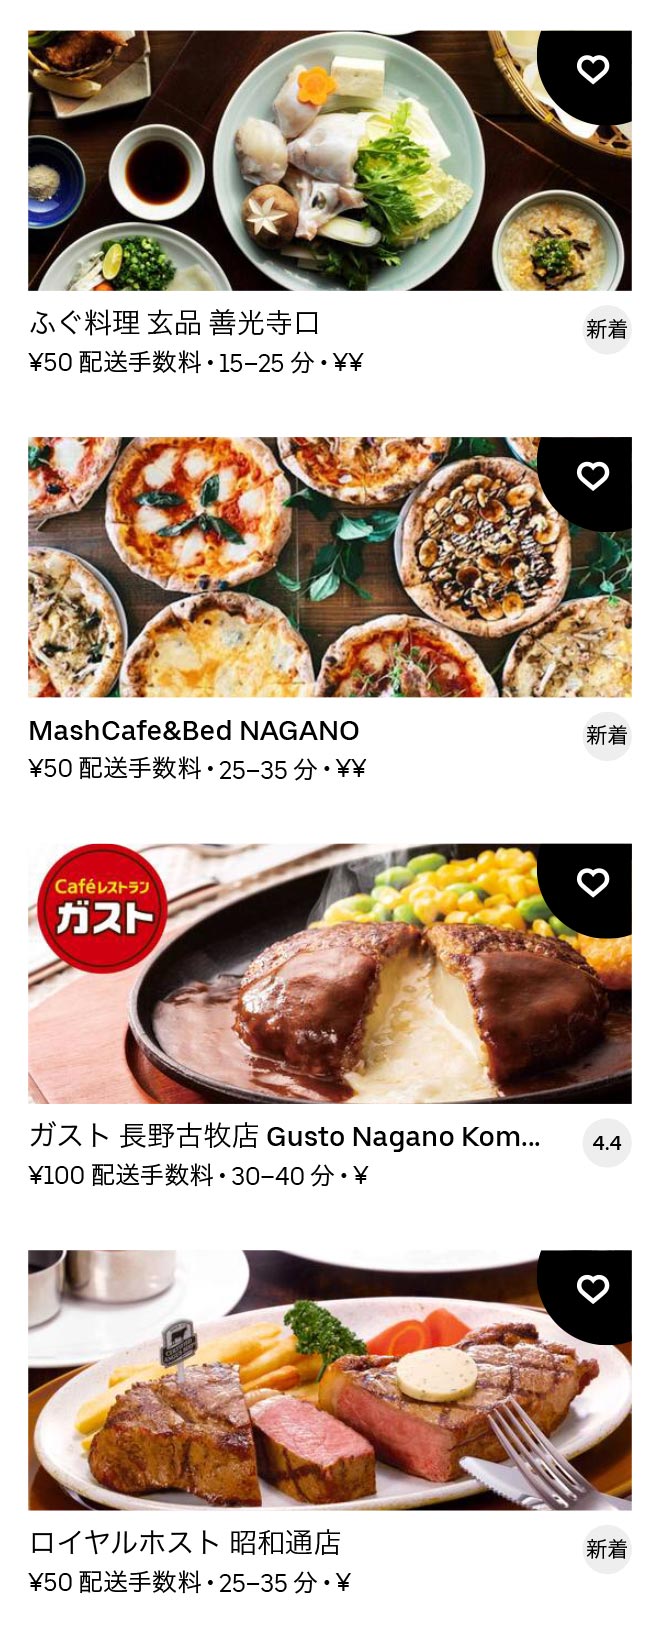 Nagano menu 2011 08